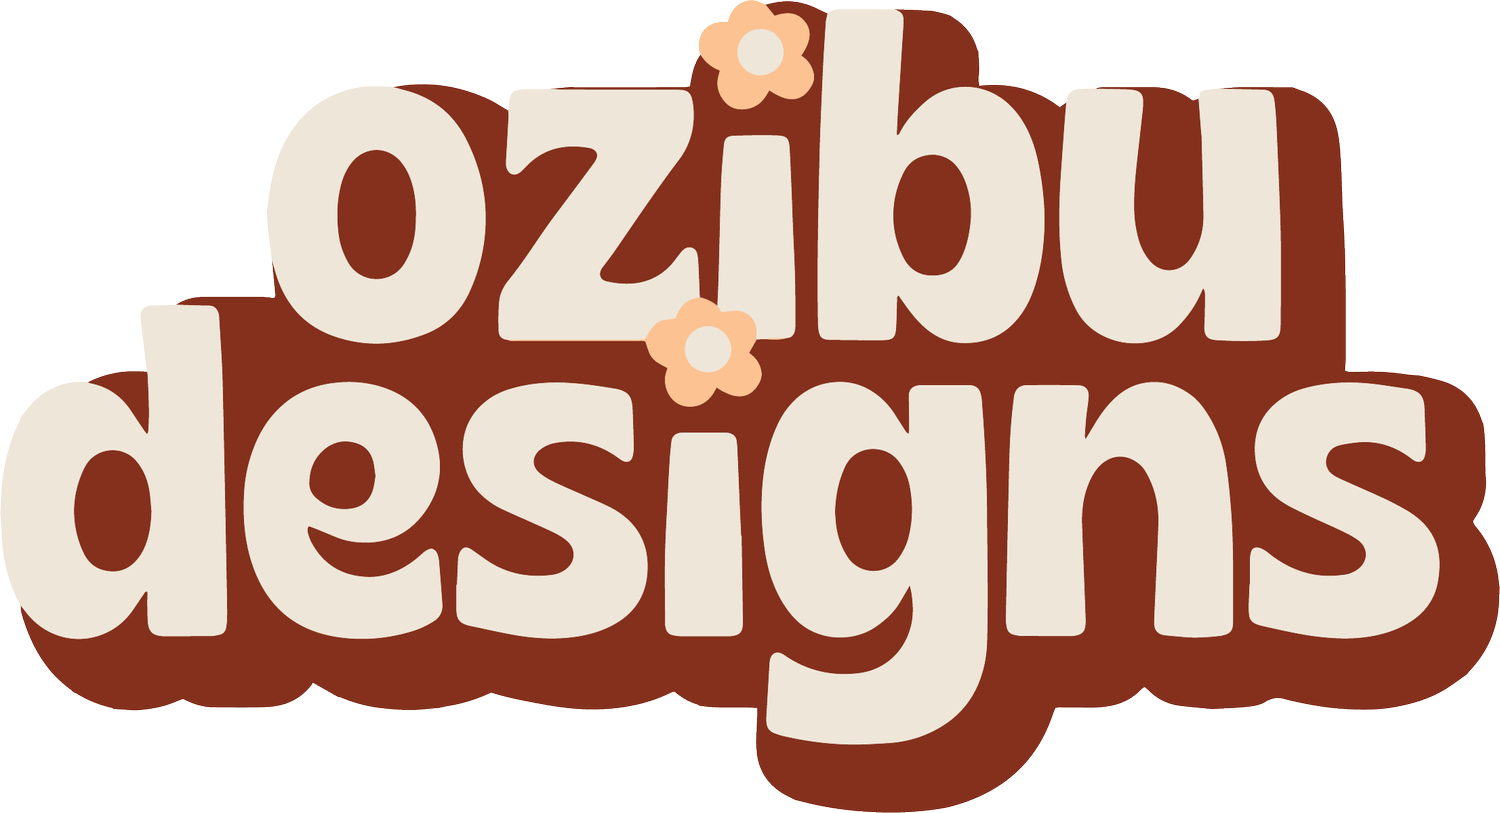 Ozibu Designs